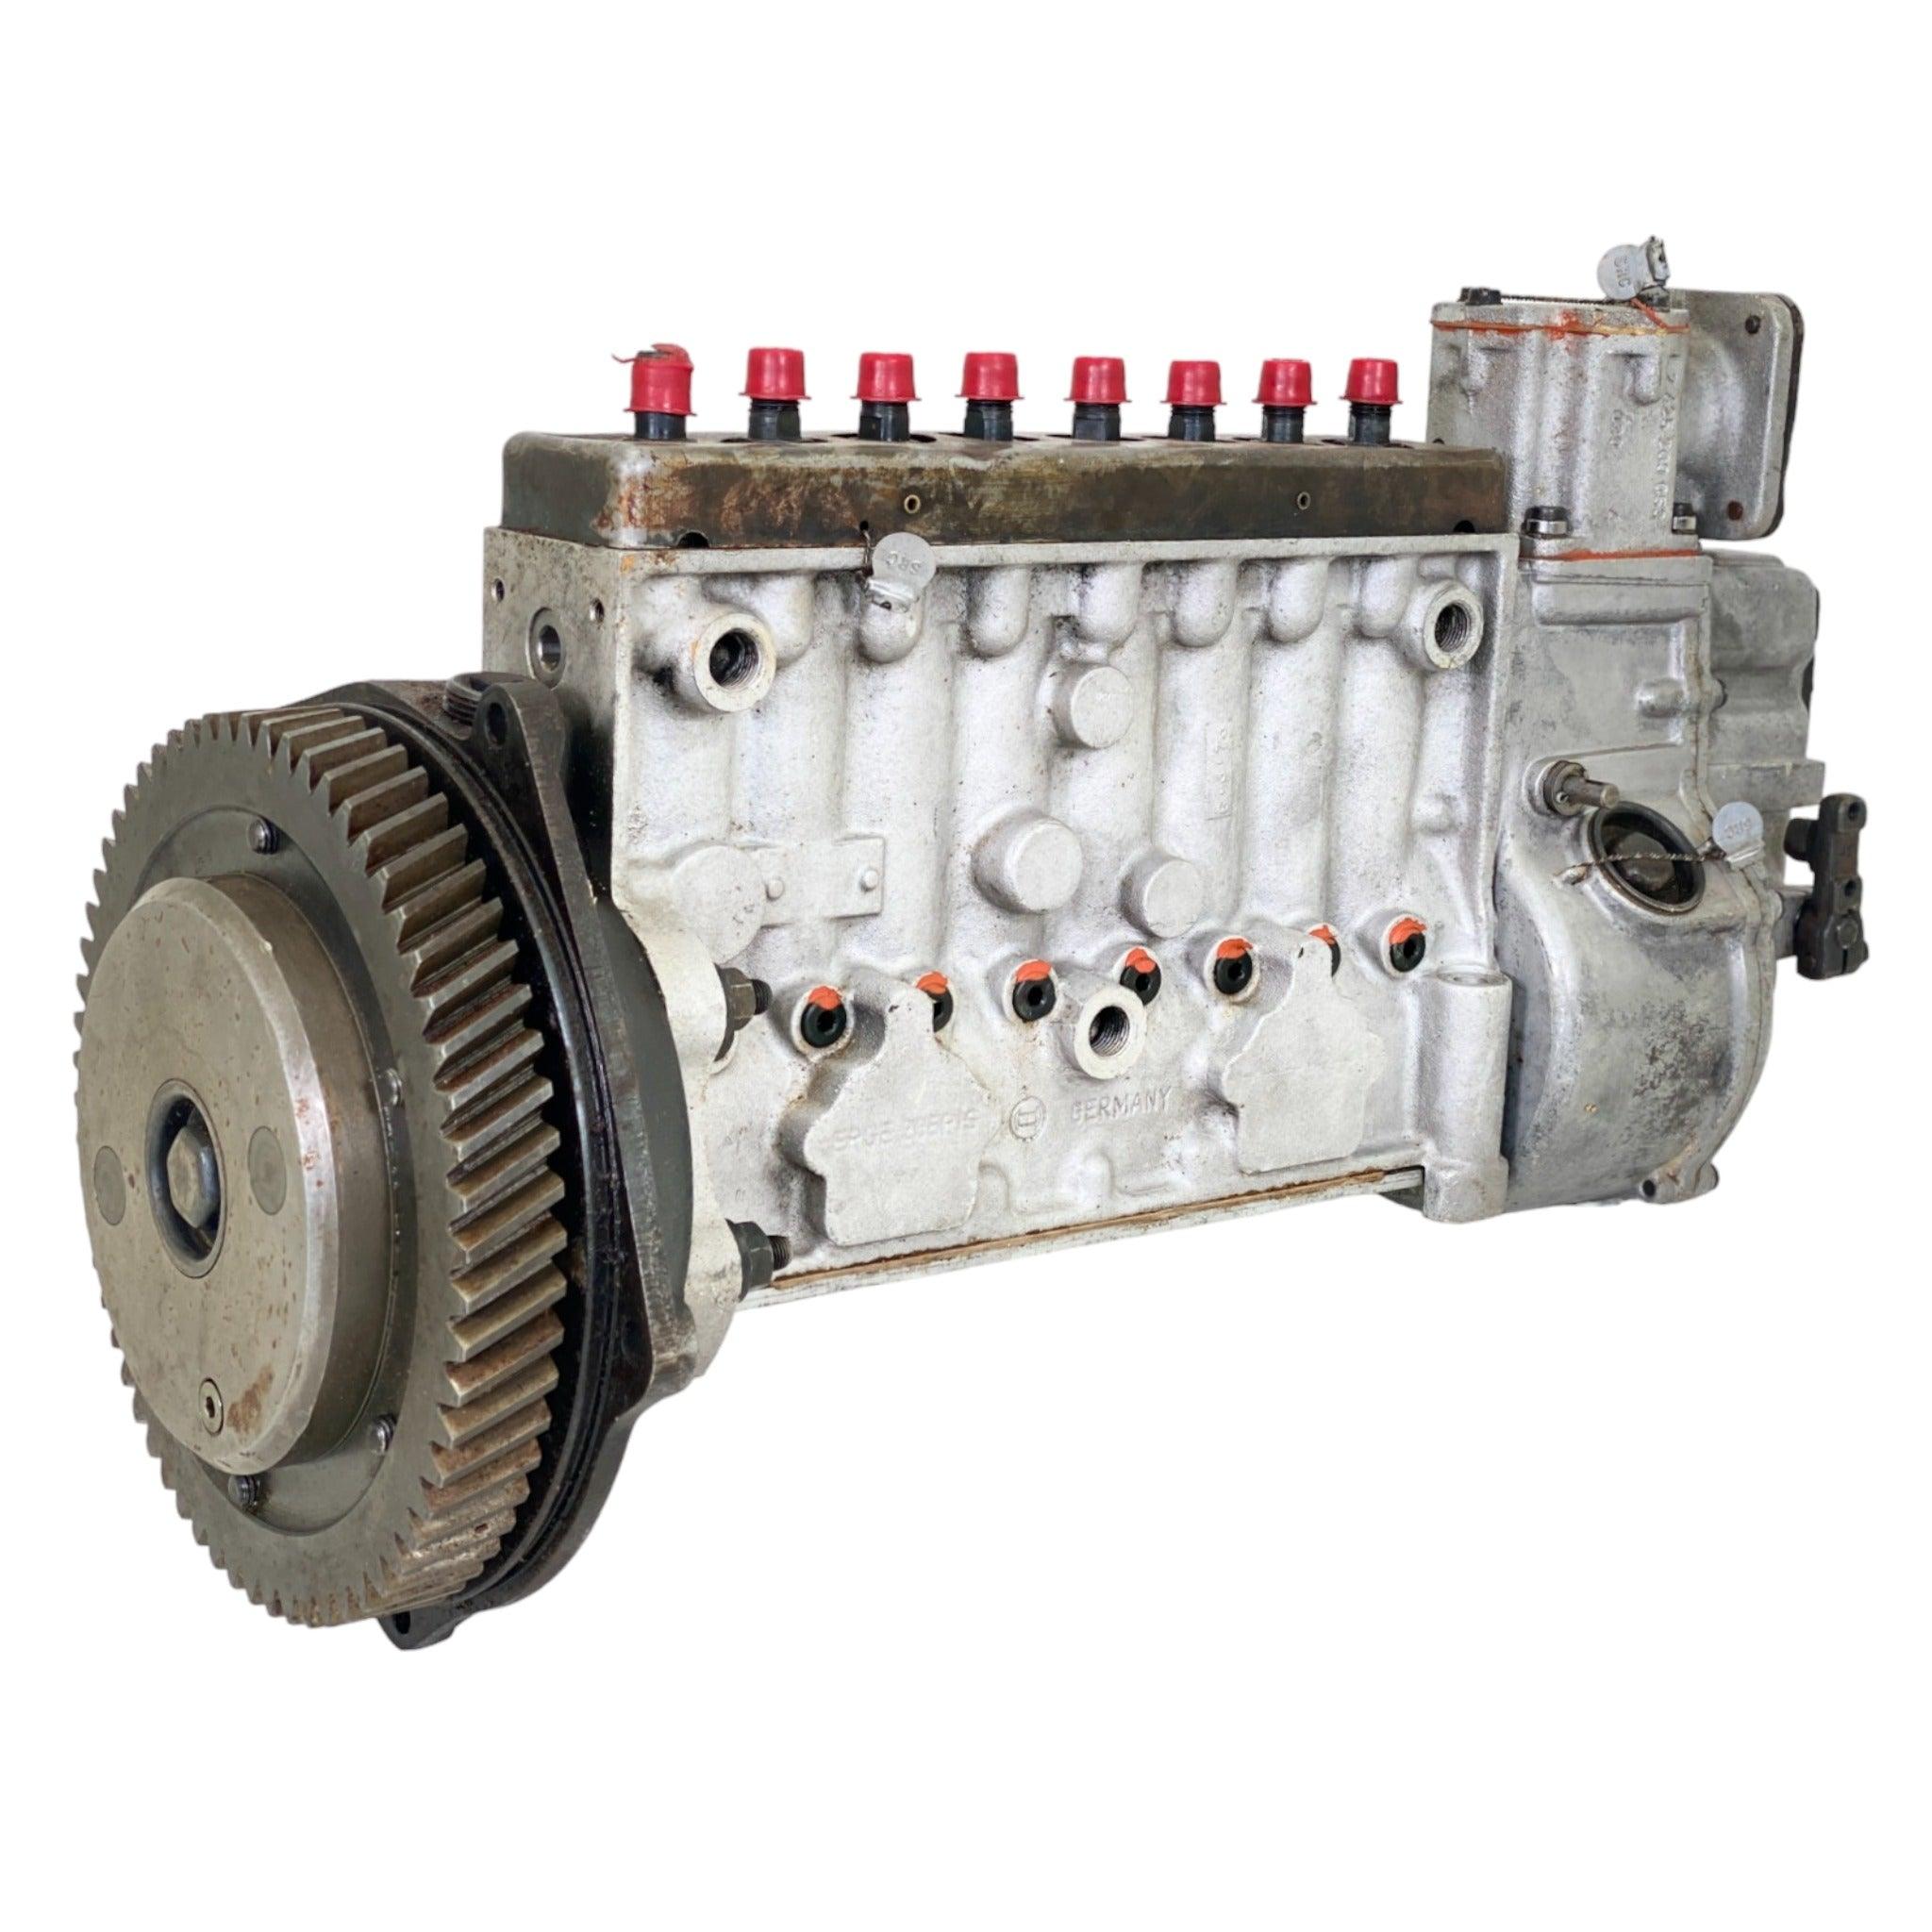 749099C91 Bosch/Src 8Cyl Fuel Injection Pump For International Dvt800 Dv800 - ADVANCED TRUCK PARTS